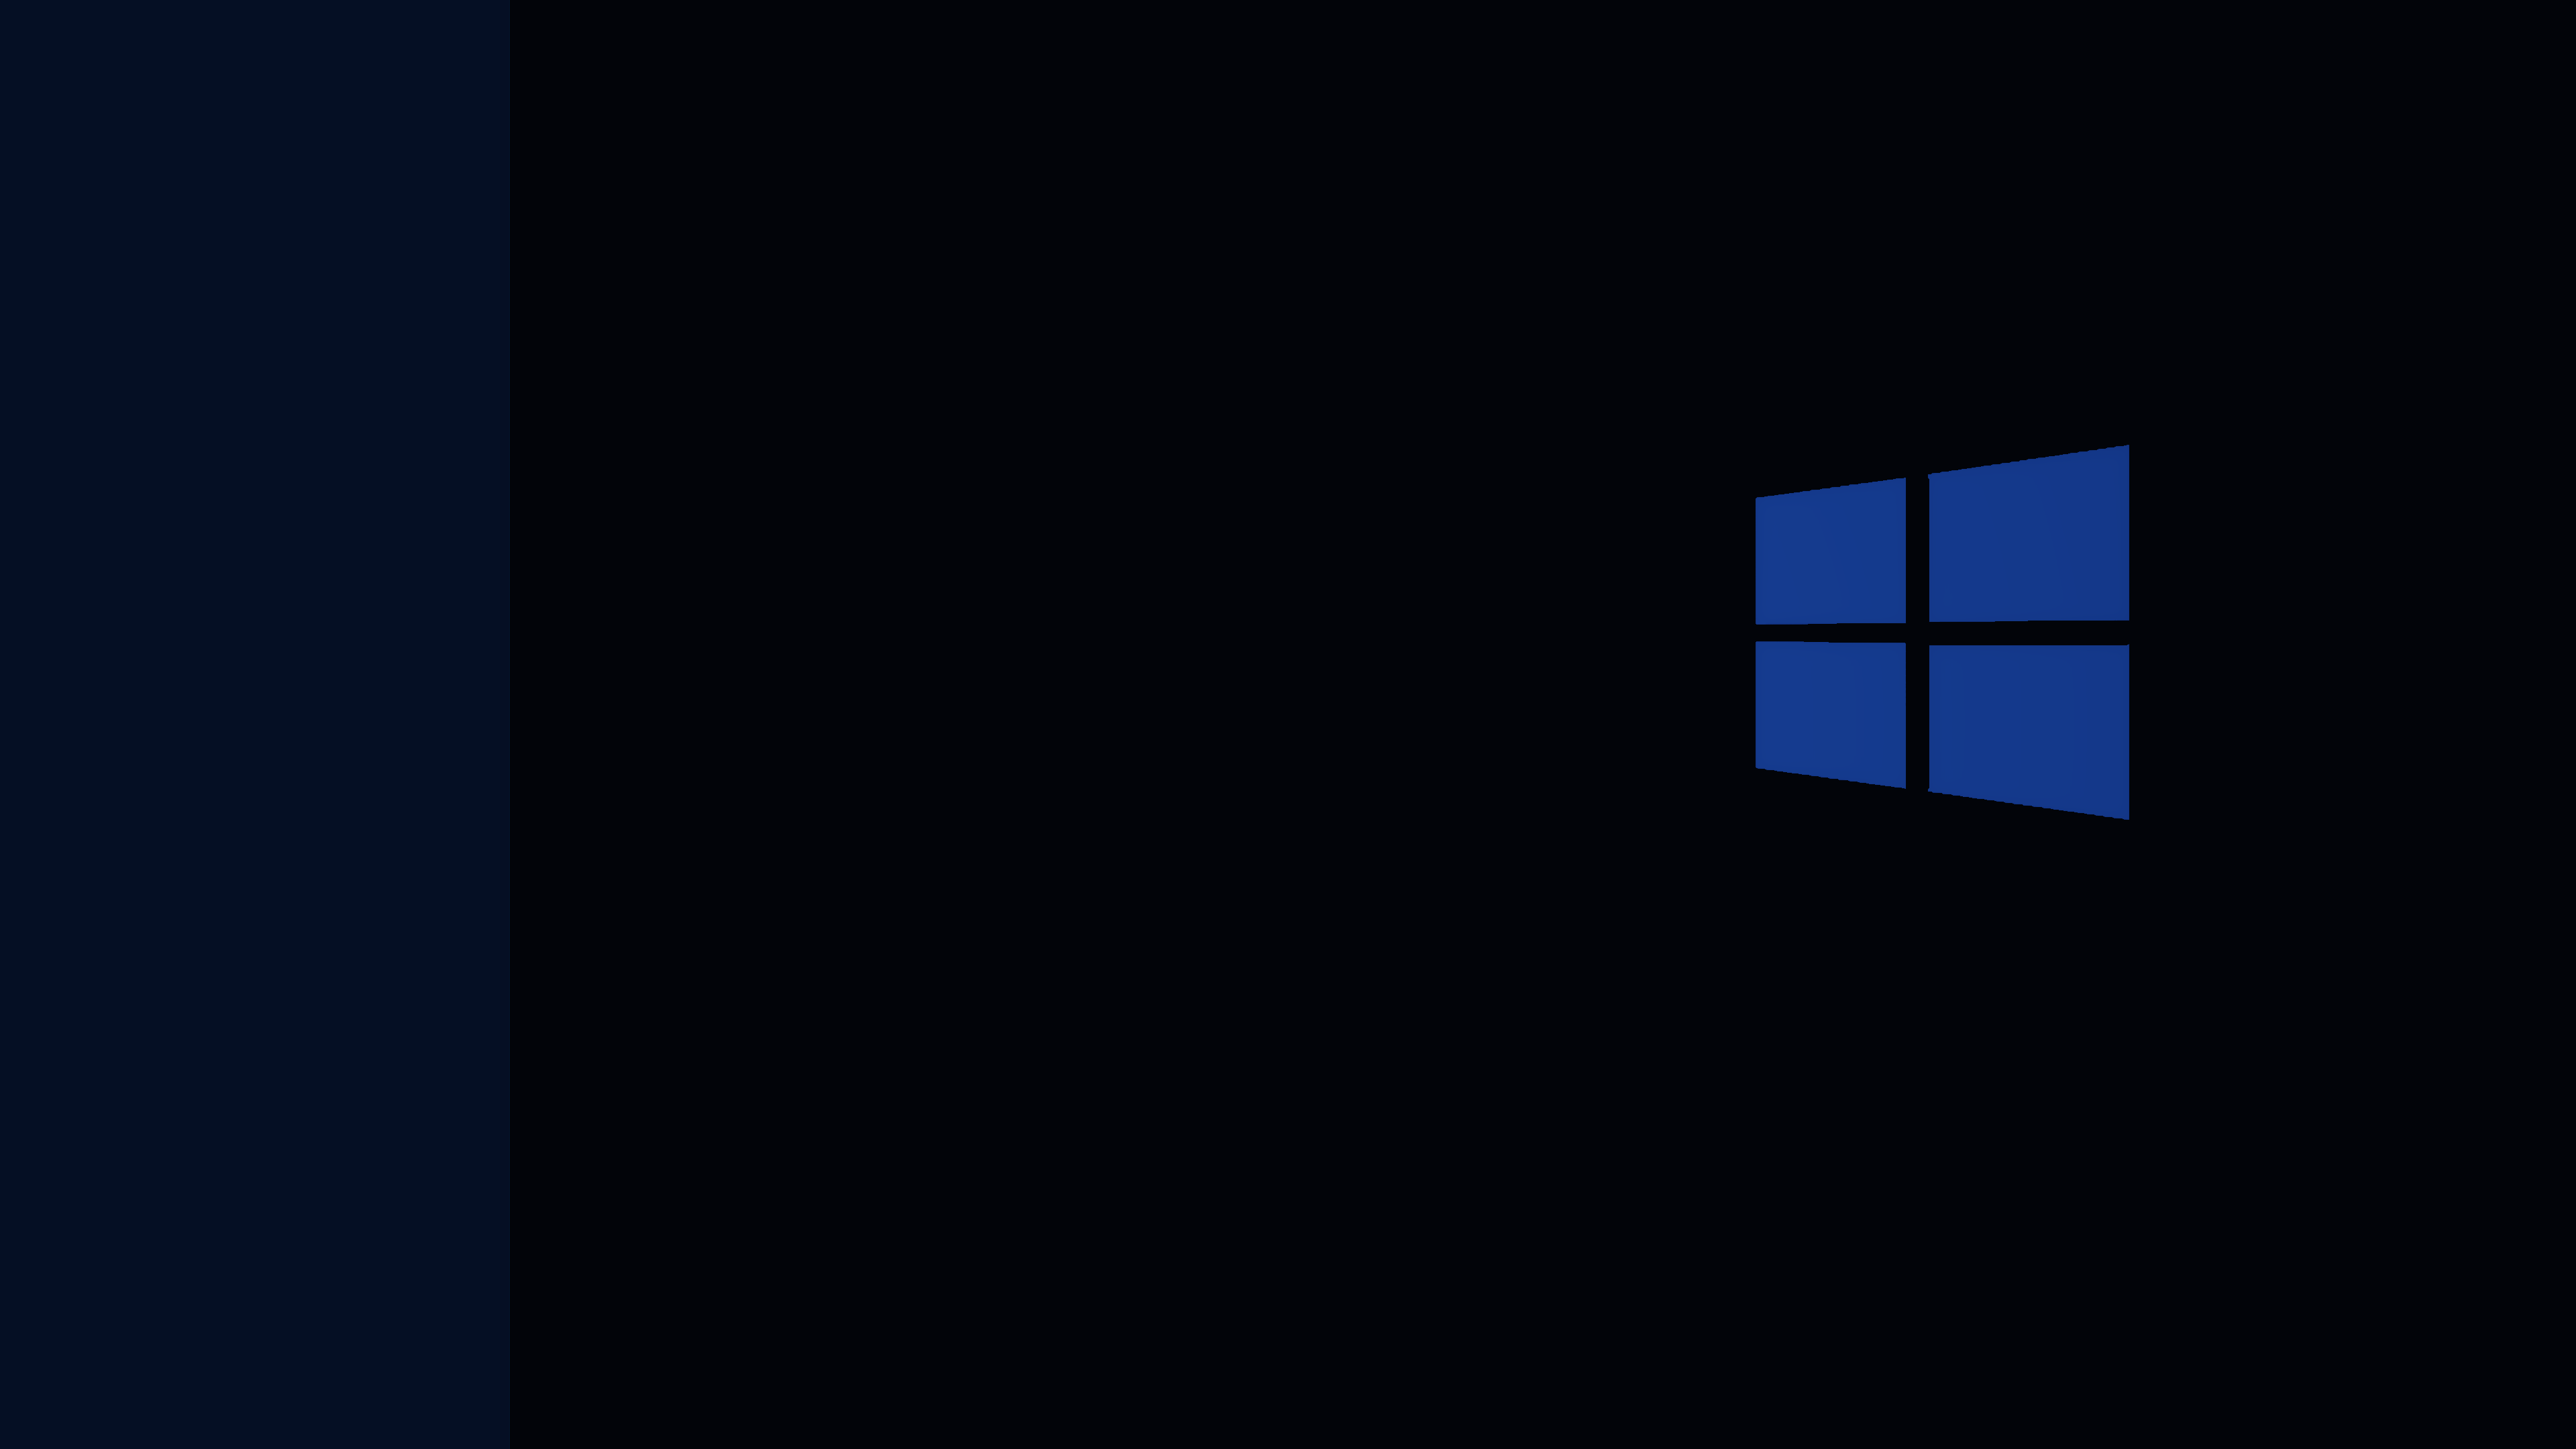 Windows 10 Simple Background Black Background Logo 3840x2160